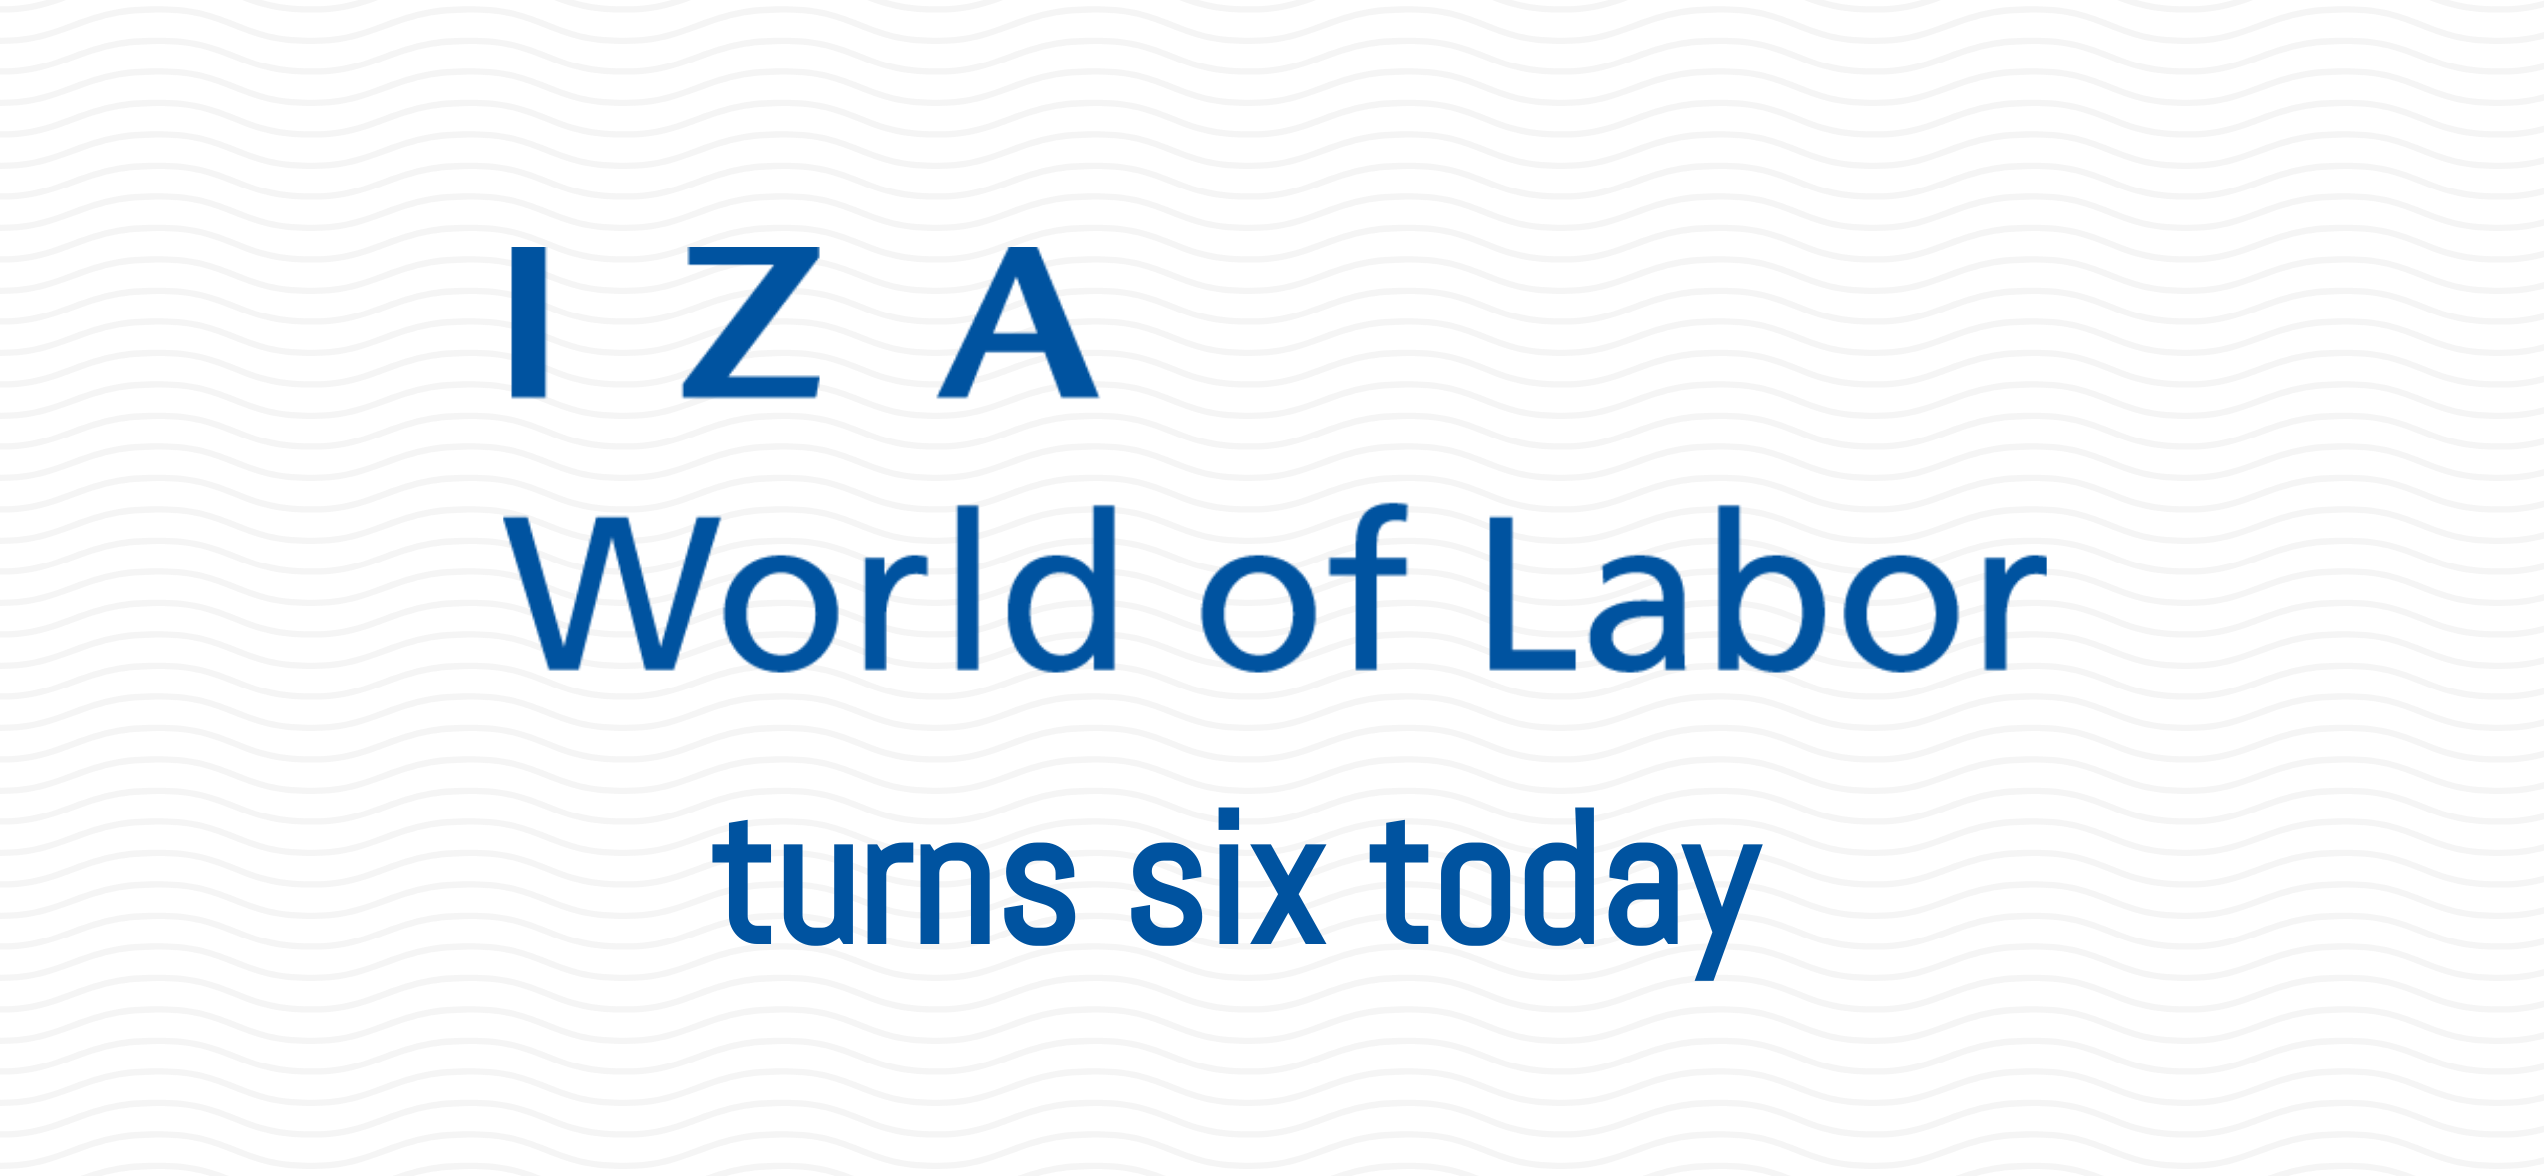 IZA World of Labor turns six 